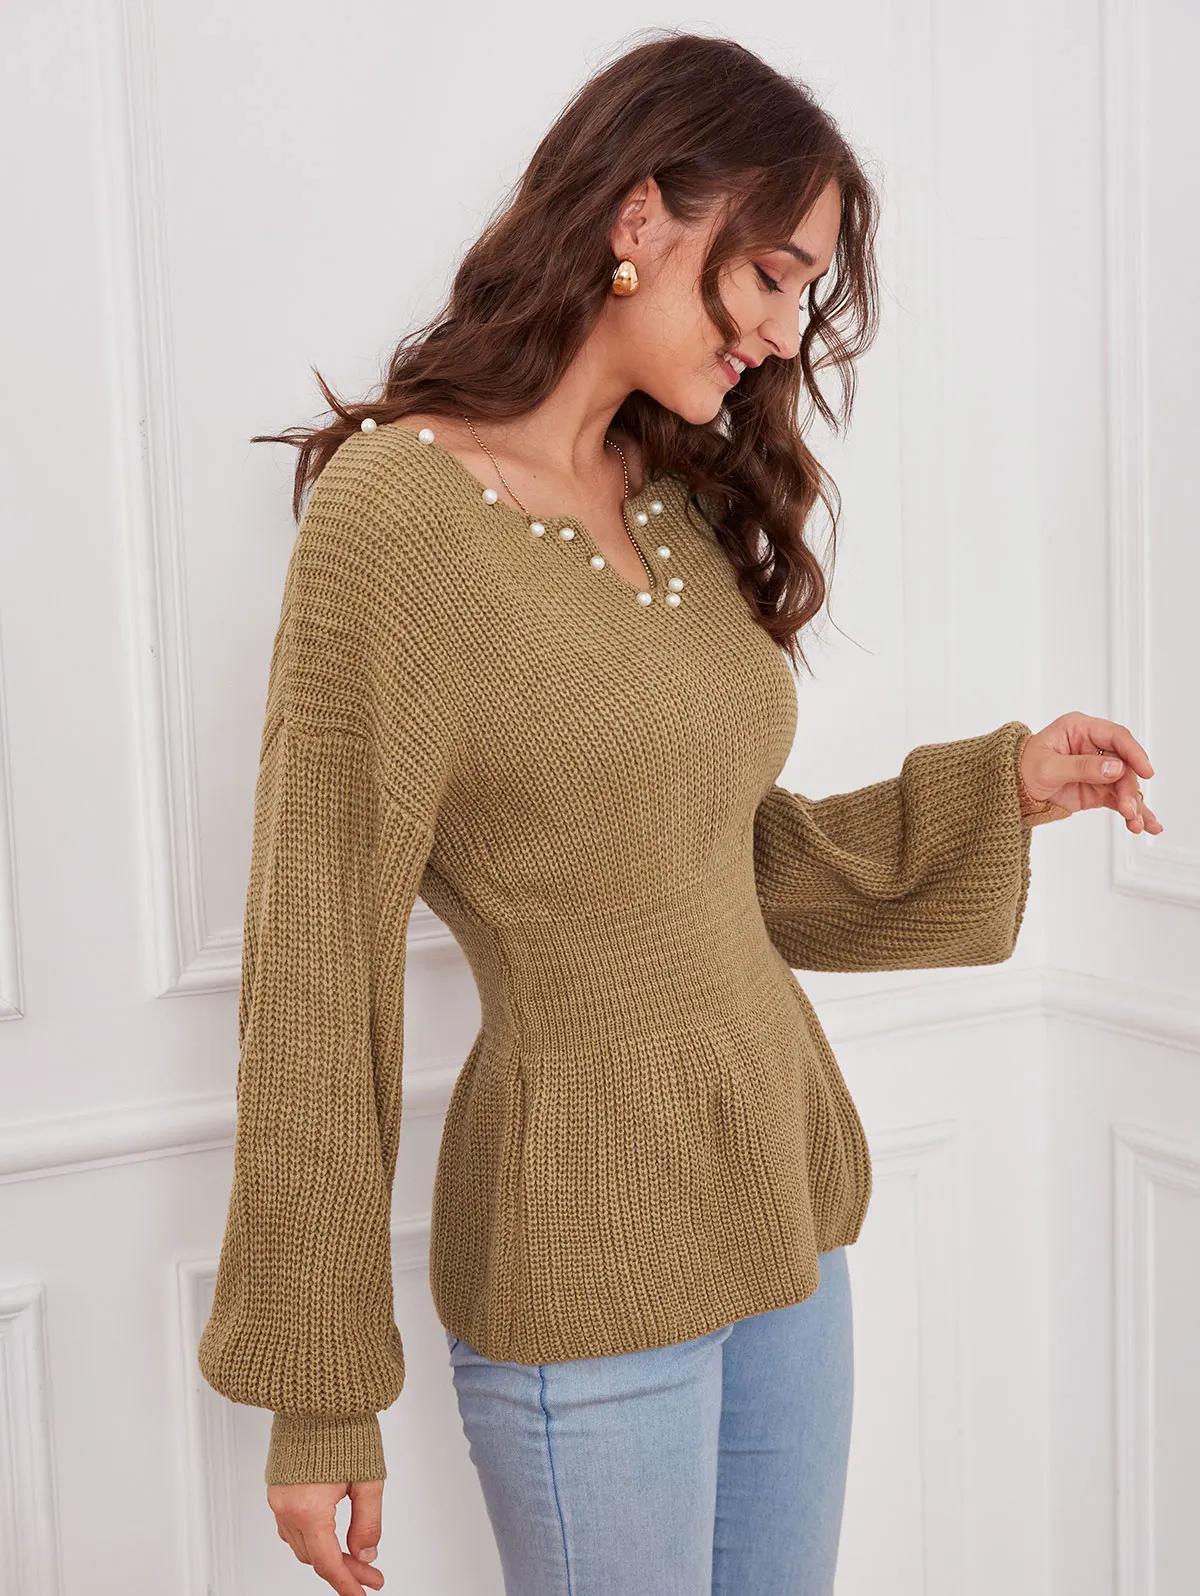 

ZAFUL Women Knitted Pullver Beading Drop Shoulder Smocked Sweater Autumn Winter U Neck Long Sleeve Jumper Fashion Tops Female